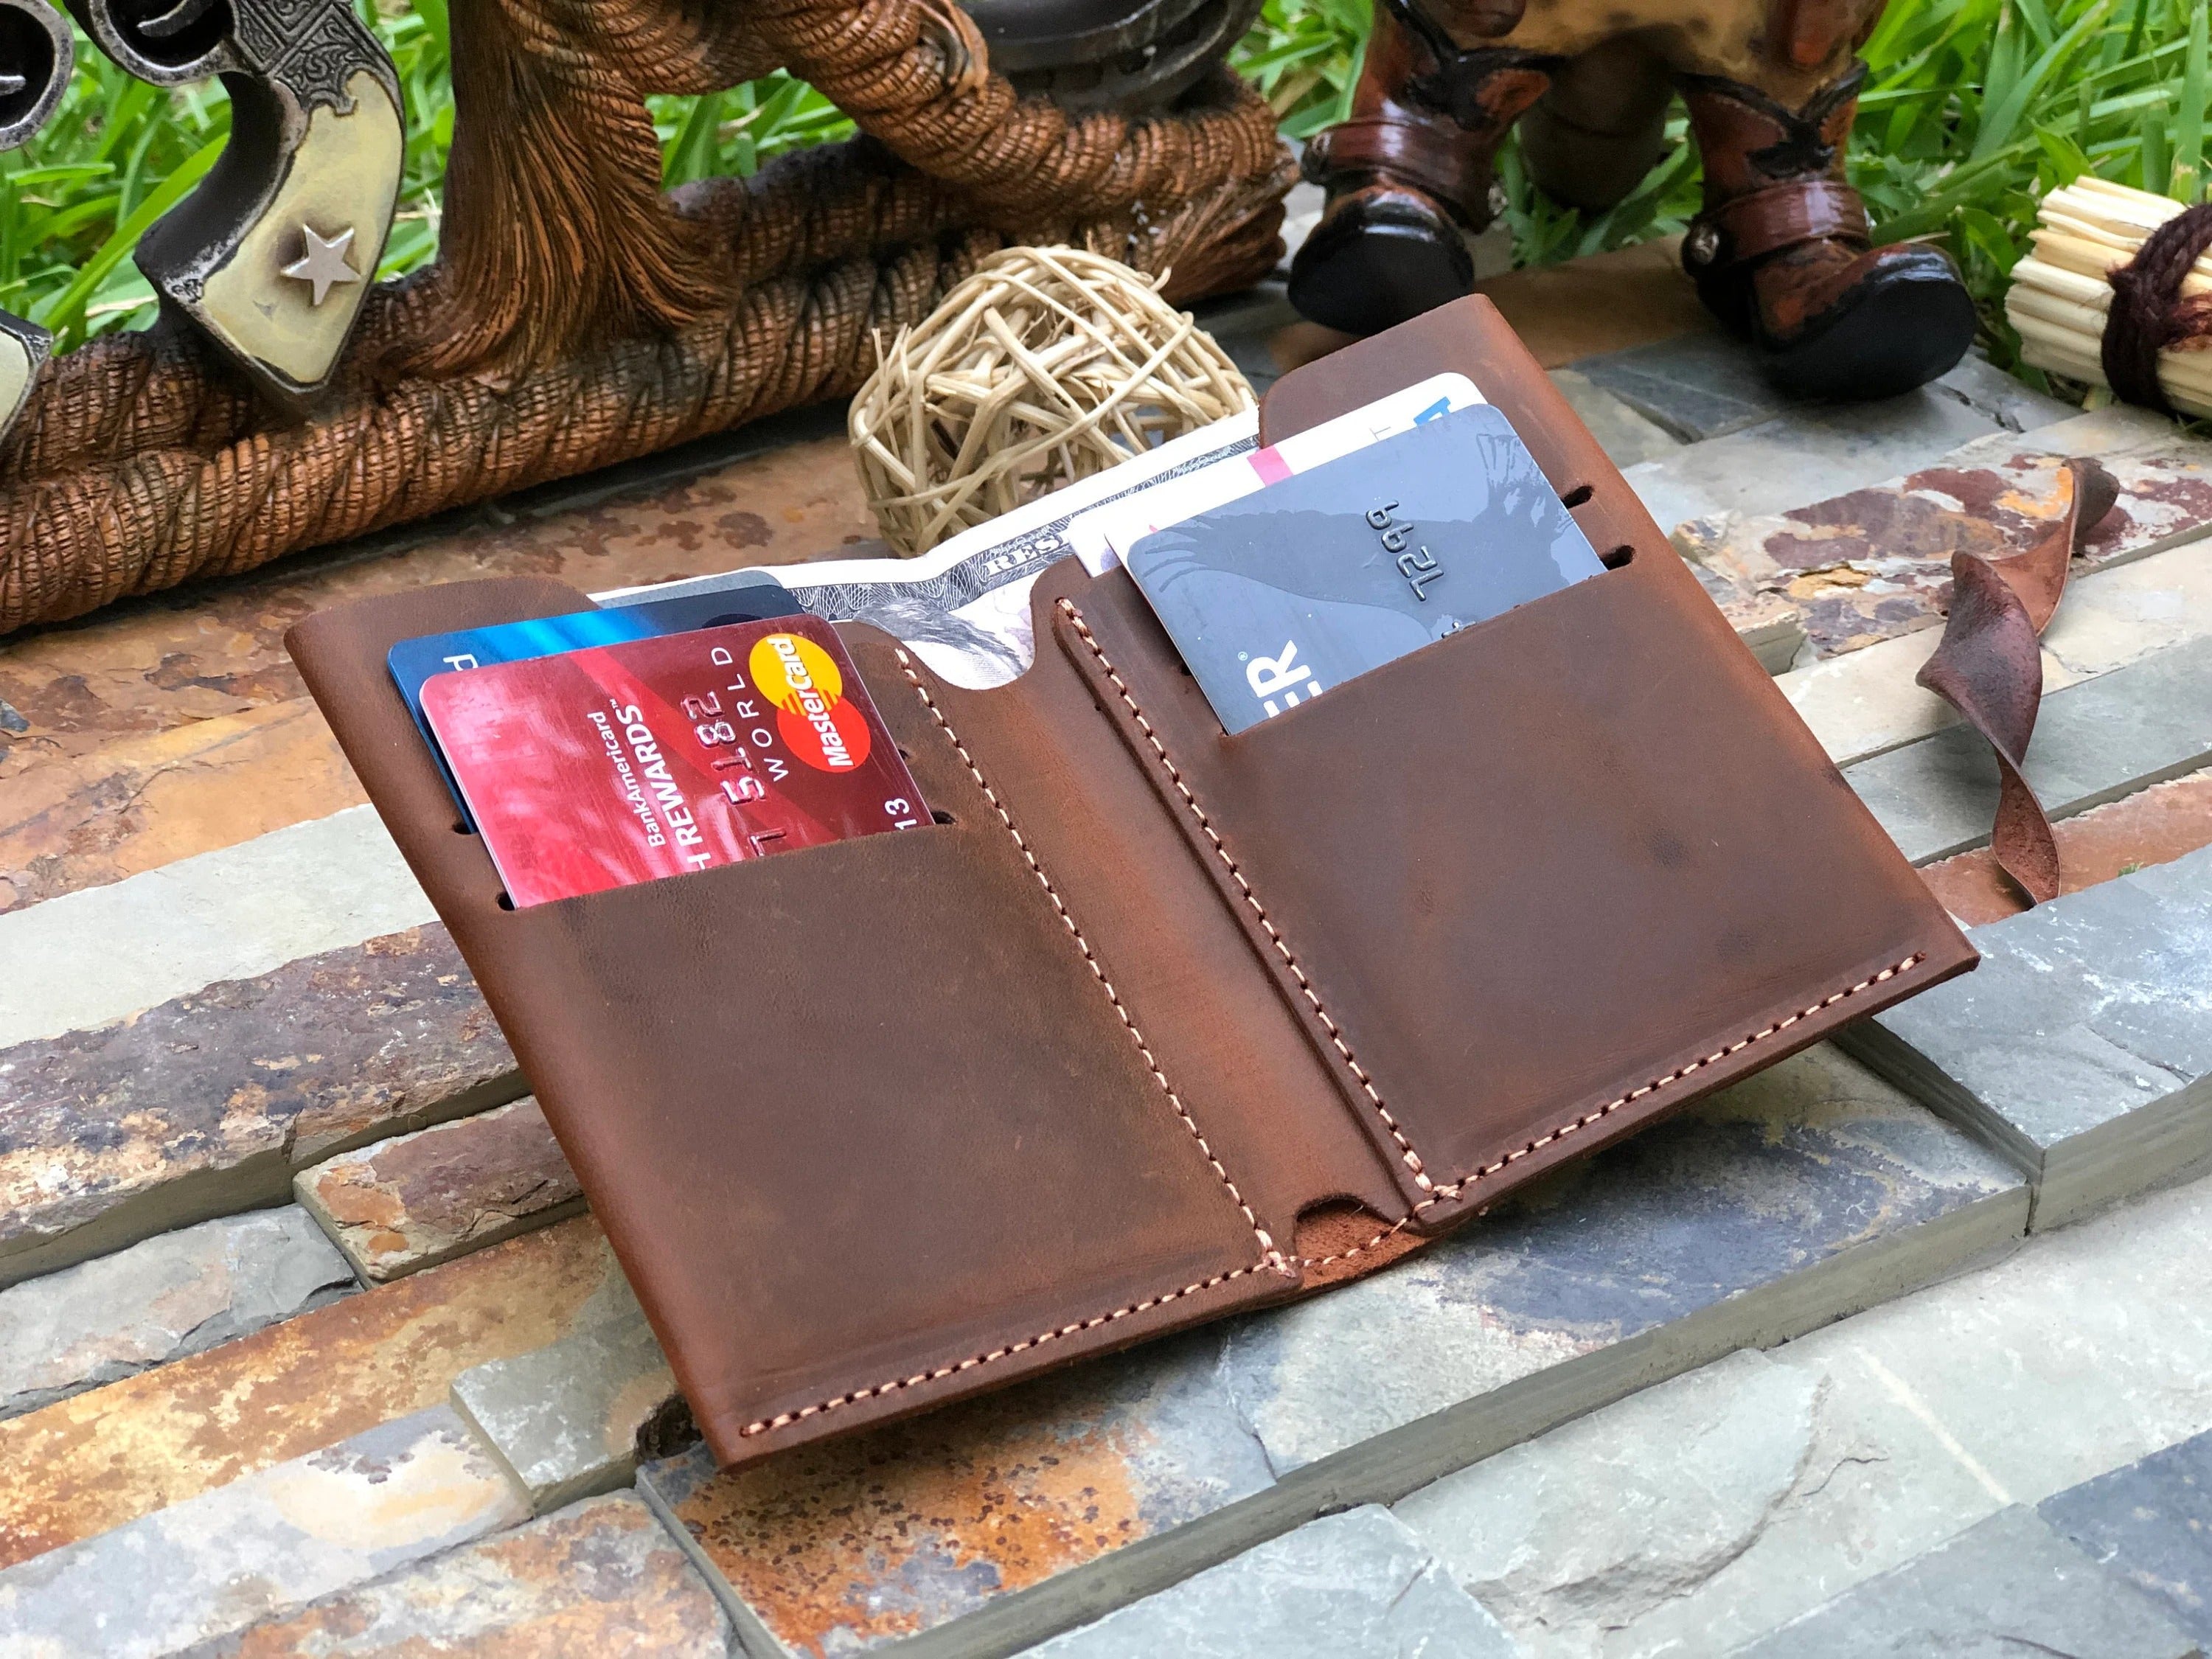 A sleek, genuine leather wallet in rich brown